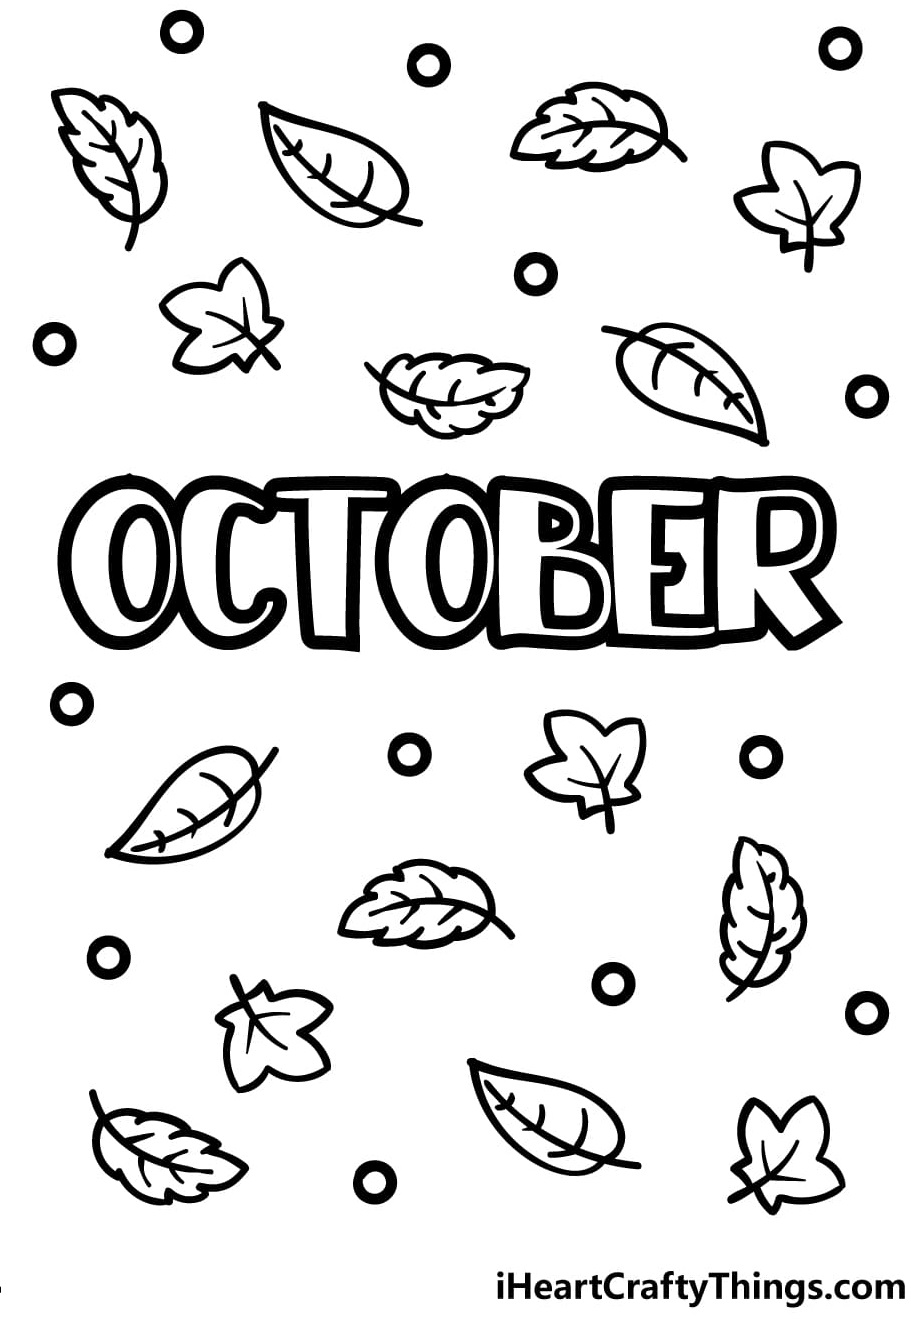 October For Children Image